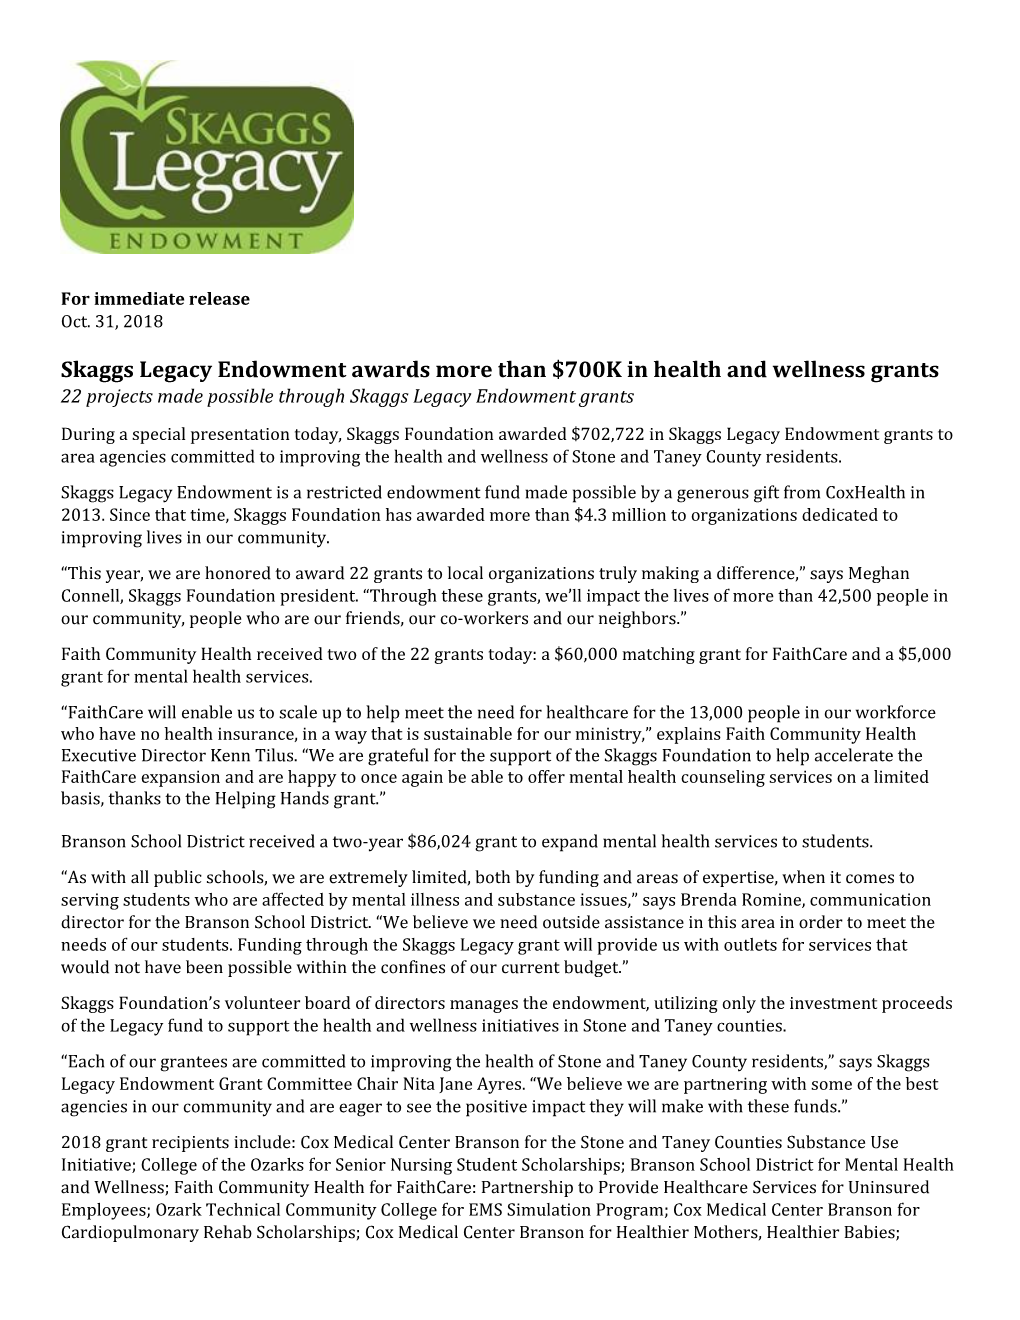 Skaggs Legacy Endowment Awardsmore Than $700K in Health and Wellness Grants